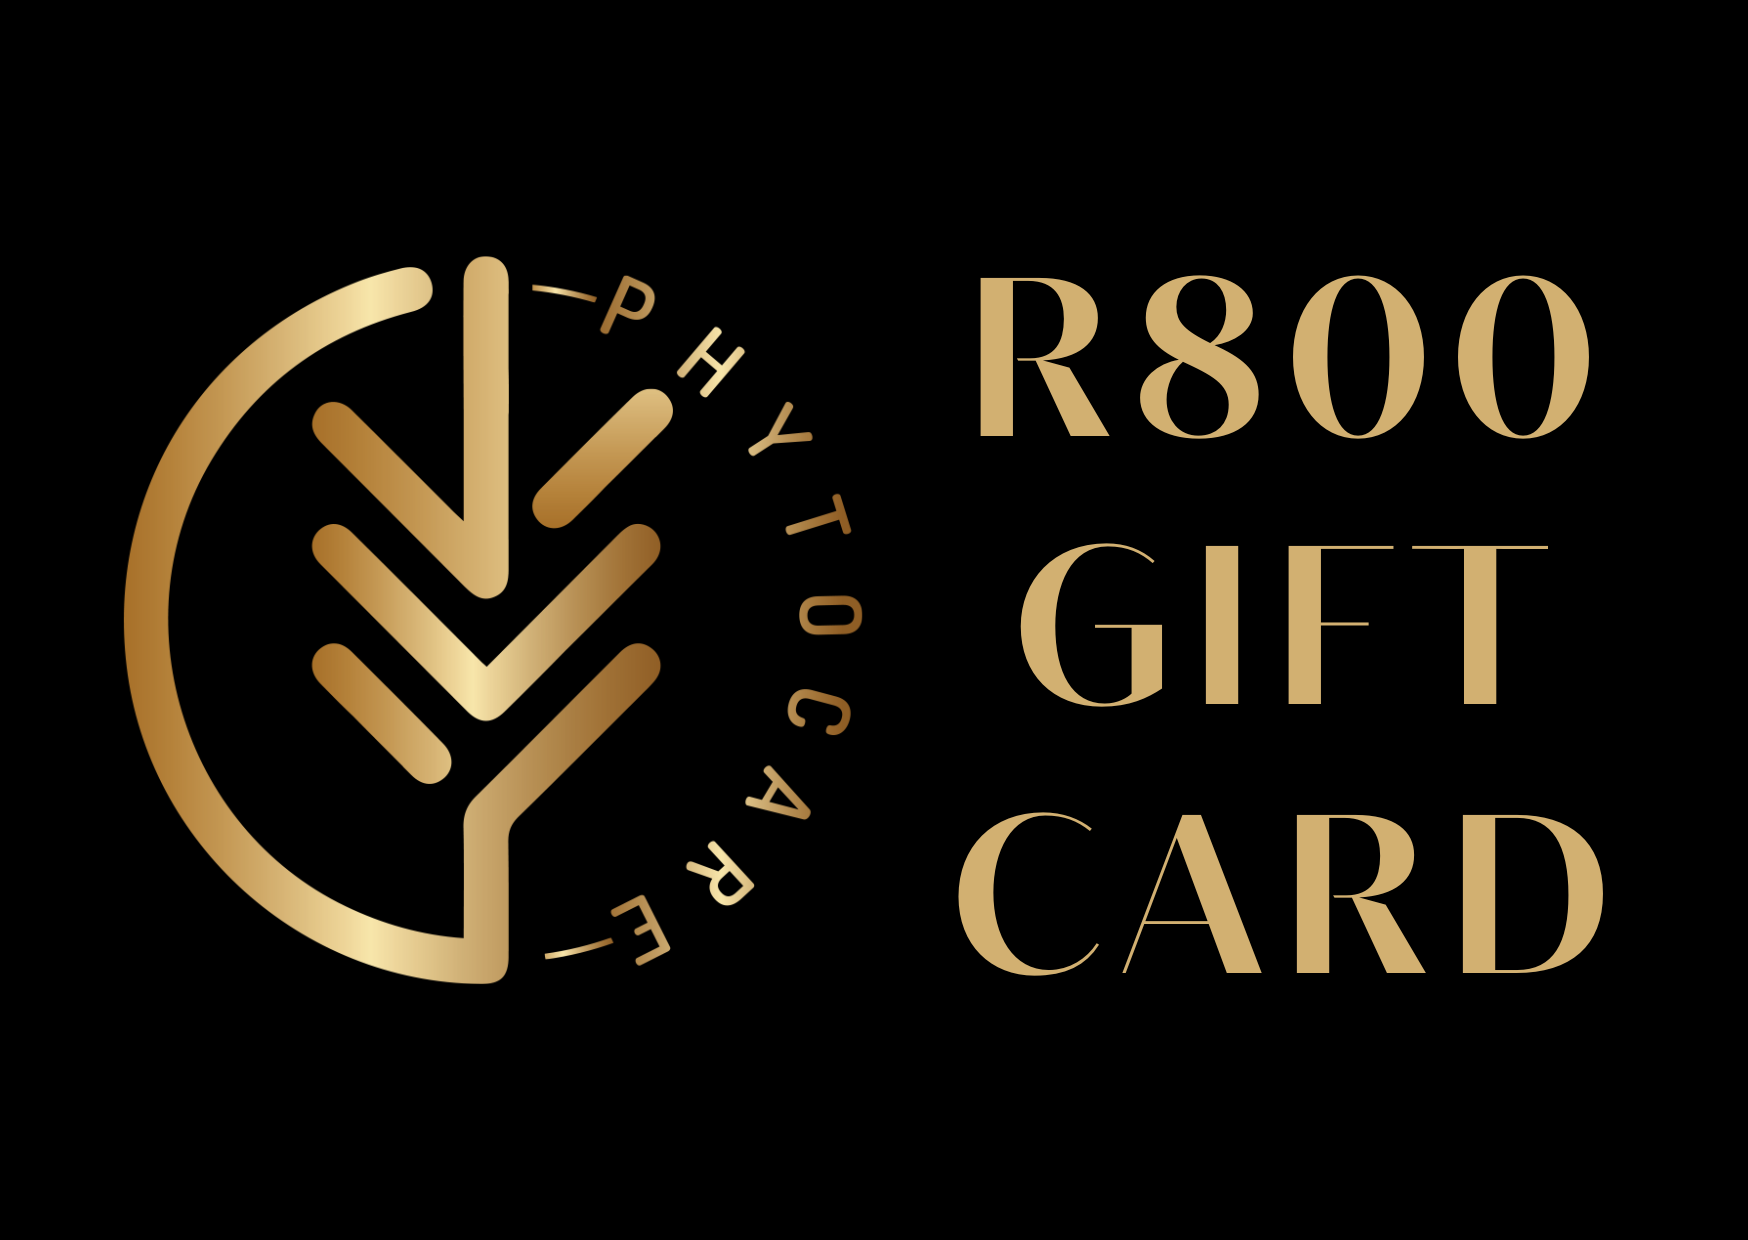 R800 Gift Card